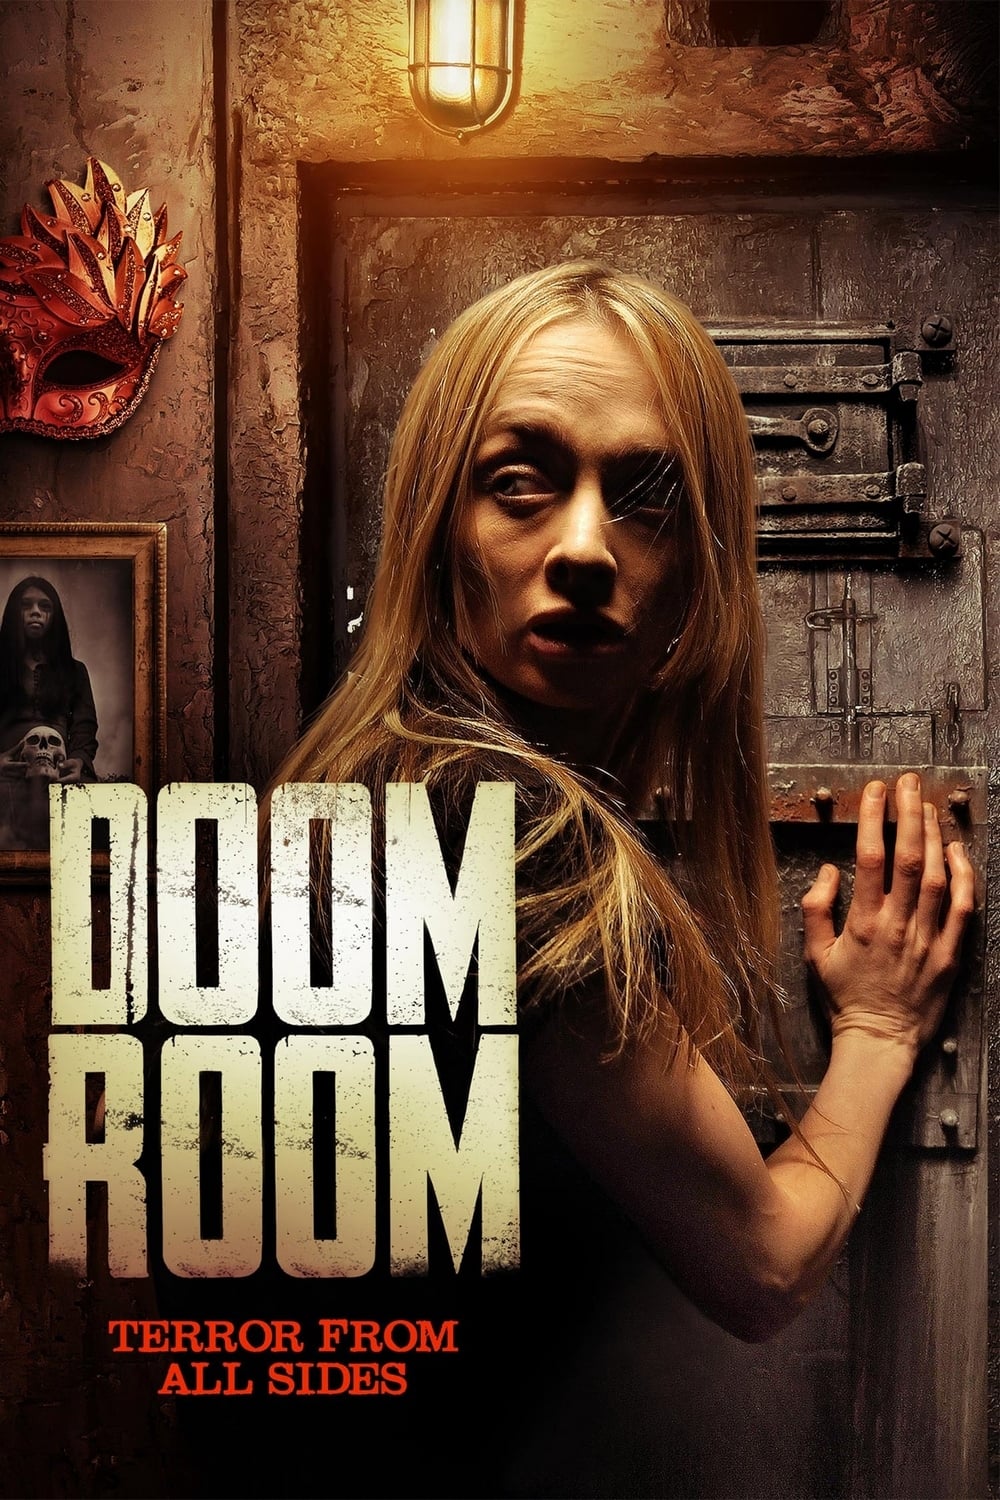 Doom Room